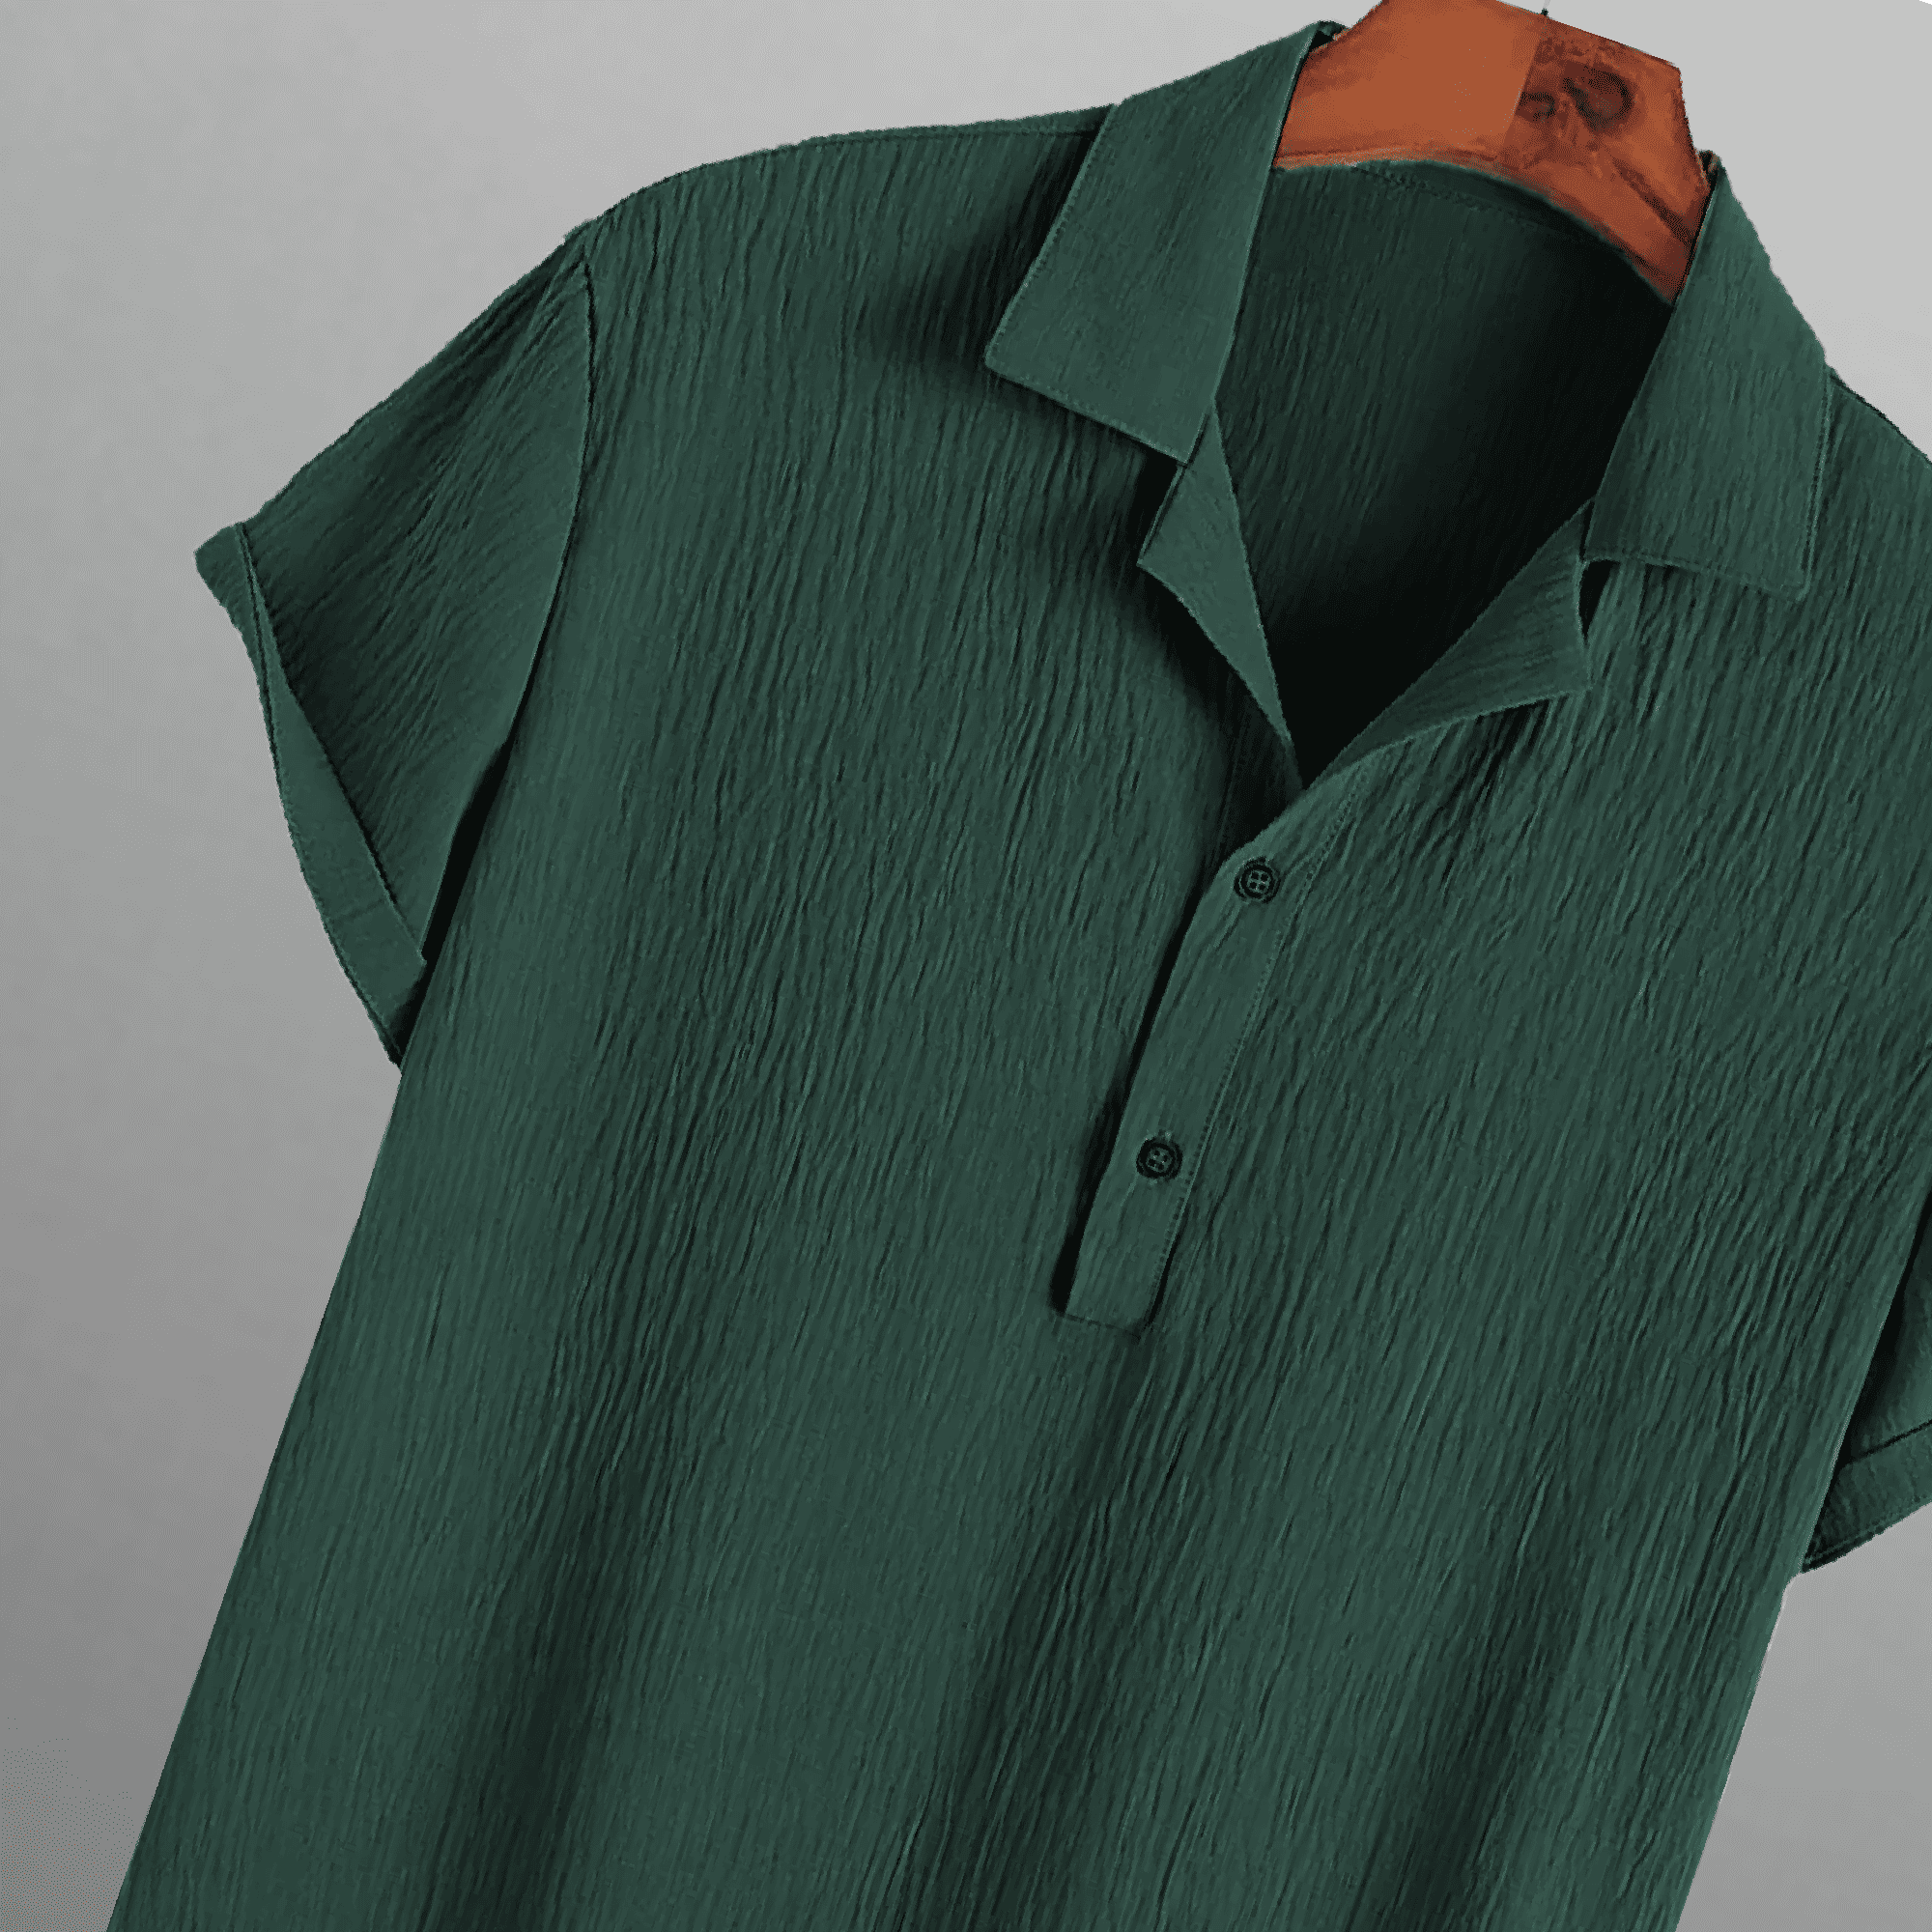 Men's Forest Green Textured T-shirt style shirt-RMS026